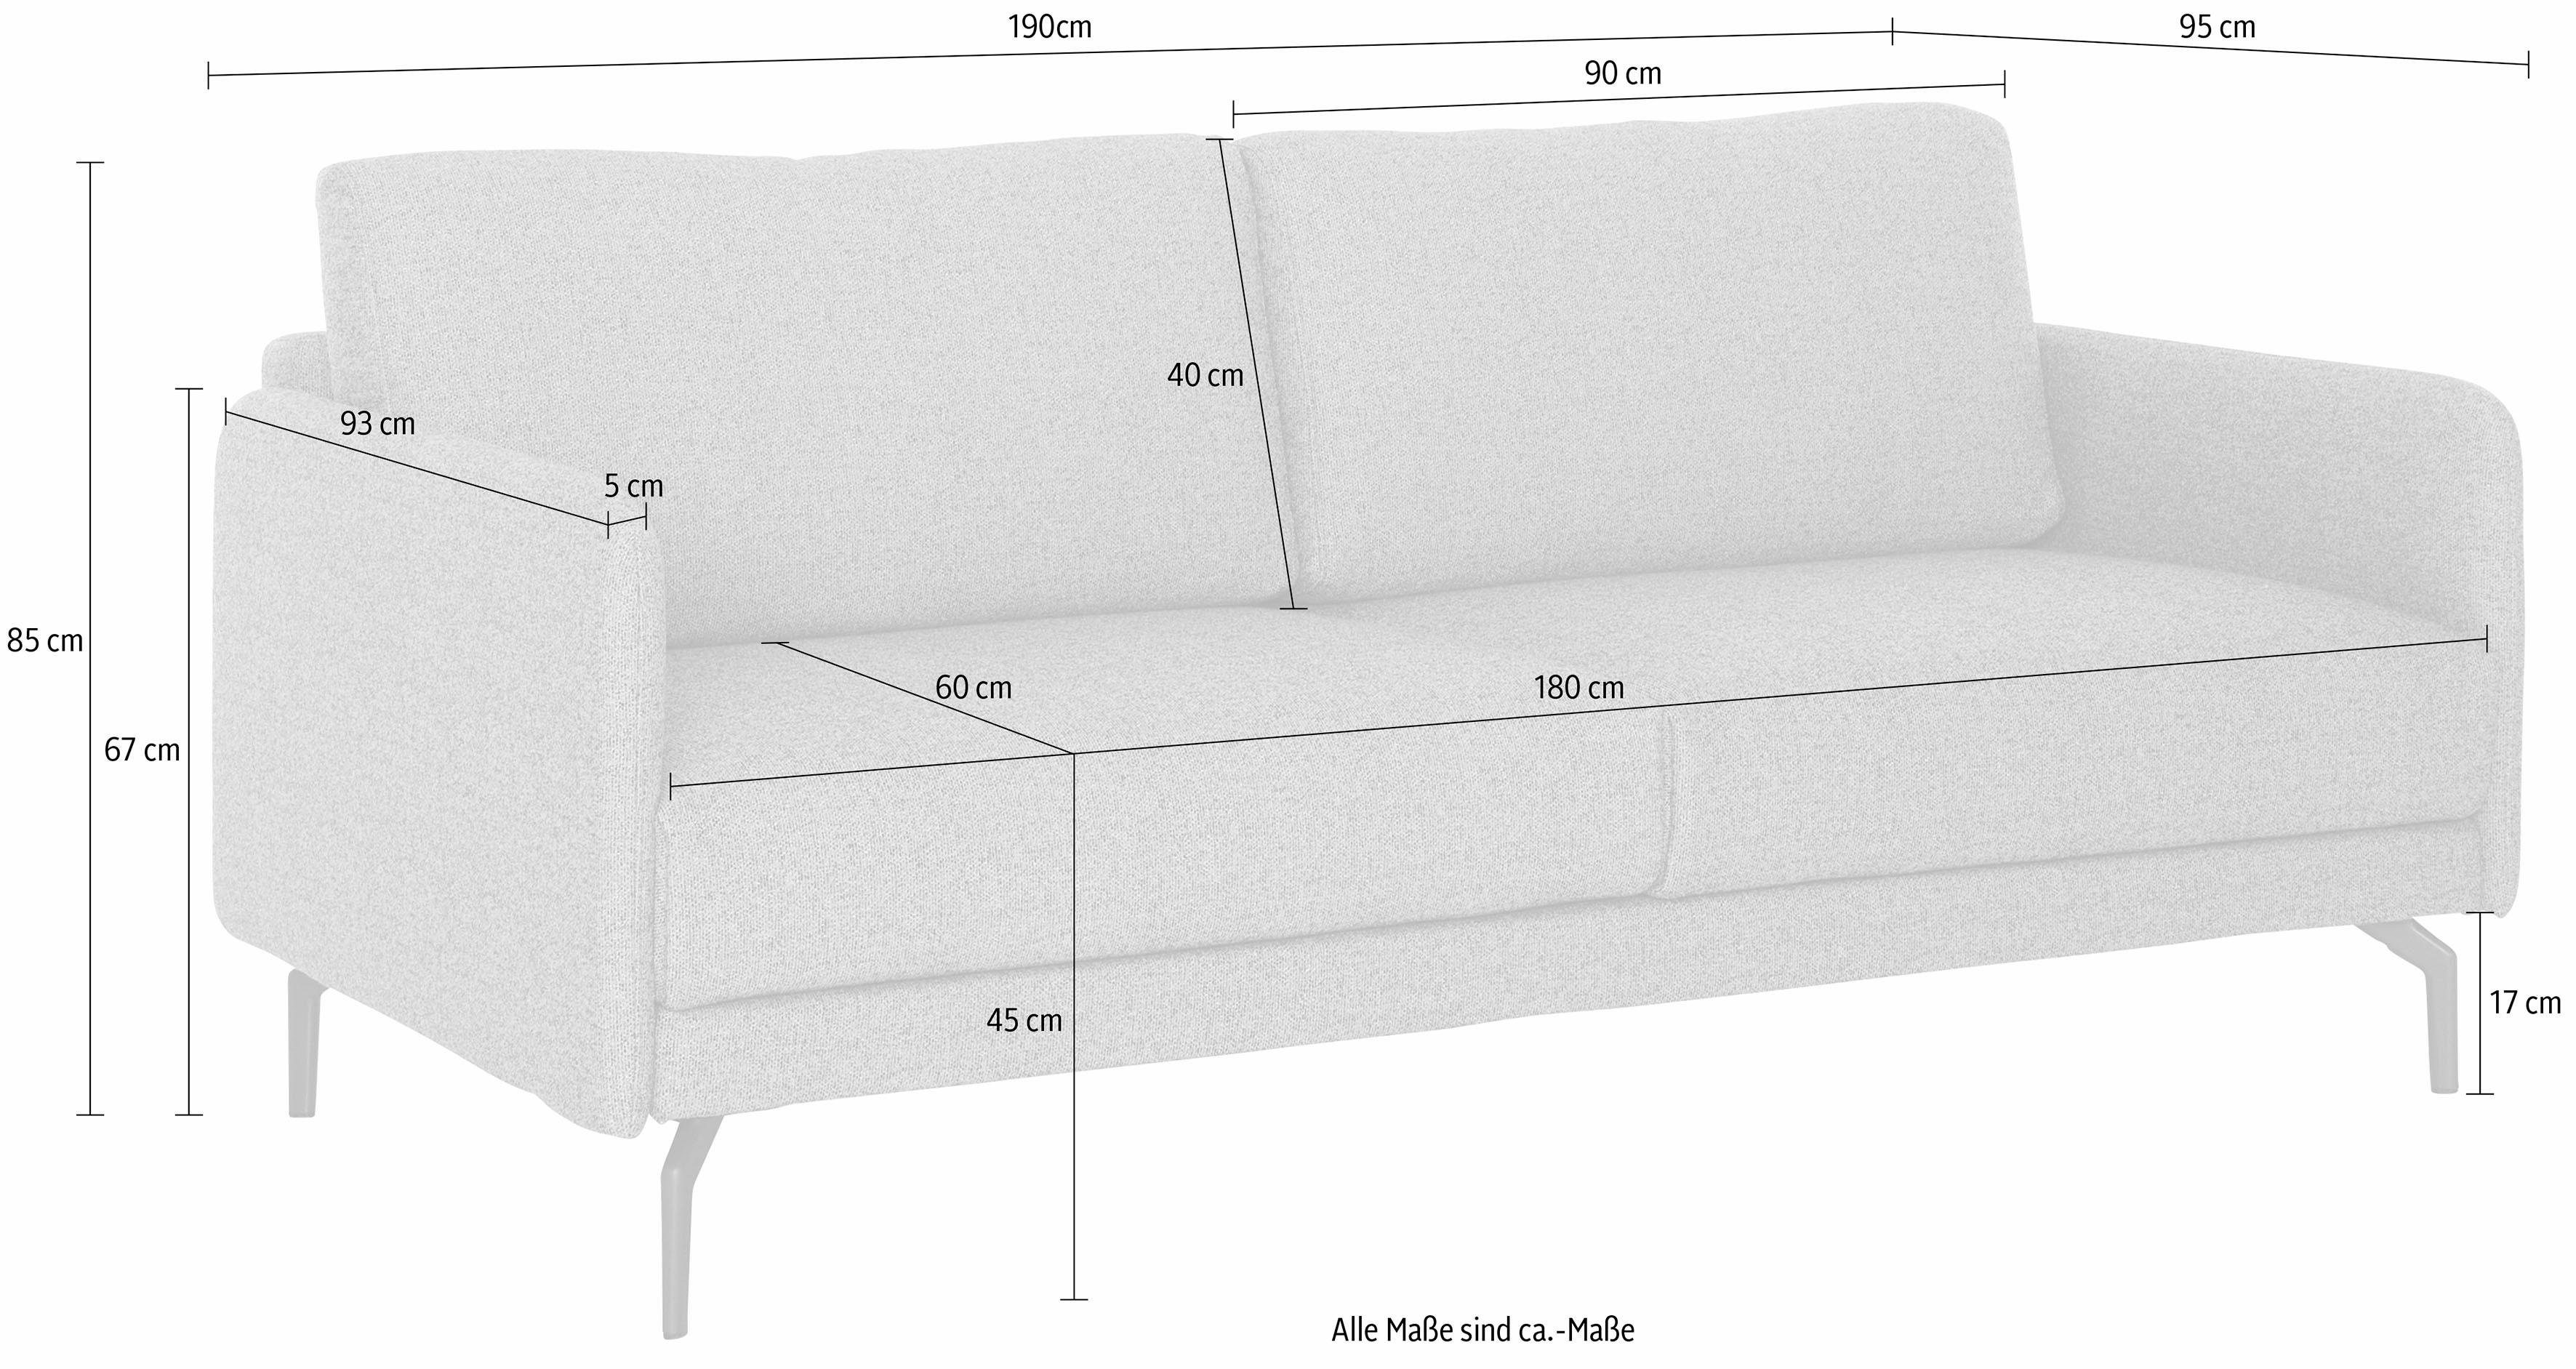 Armlehne Breite sofa hülsta Umbragrau 190 schmal, sehr cm, hs.450, Alugussfuß 3-Sitzer